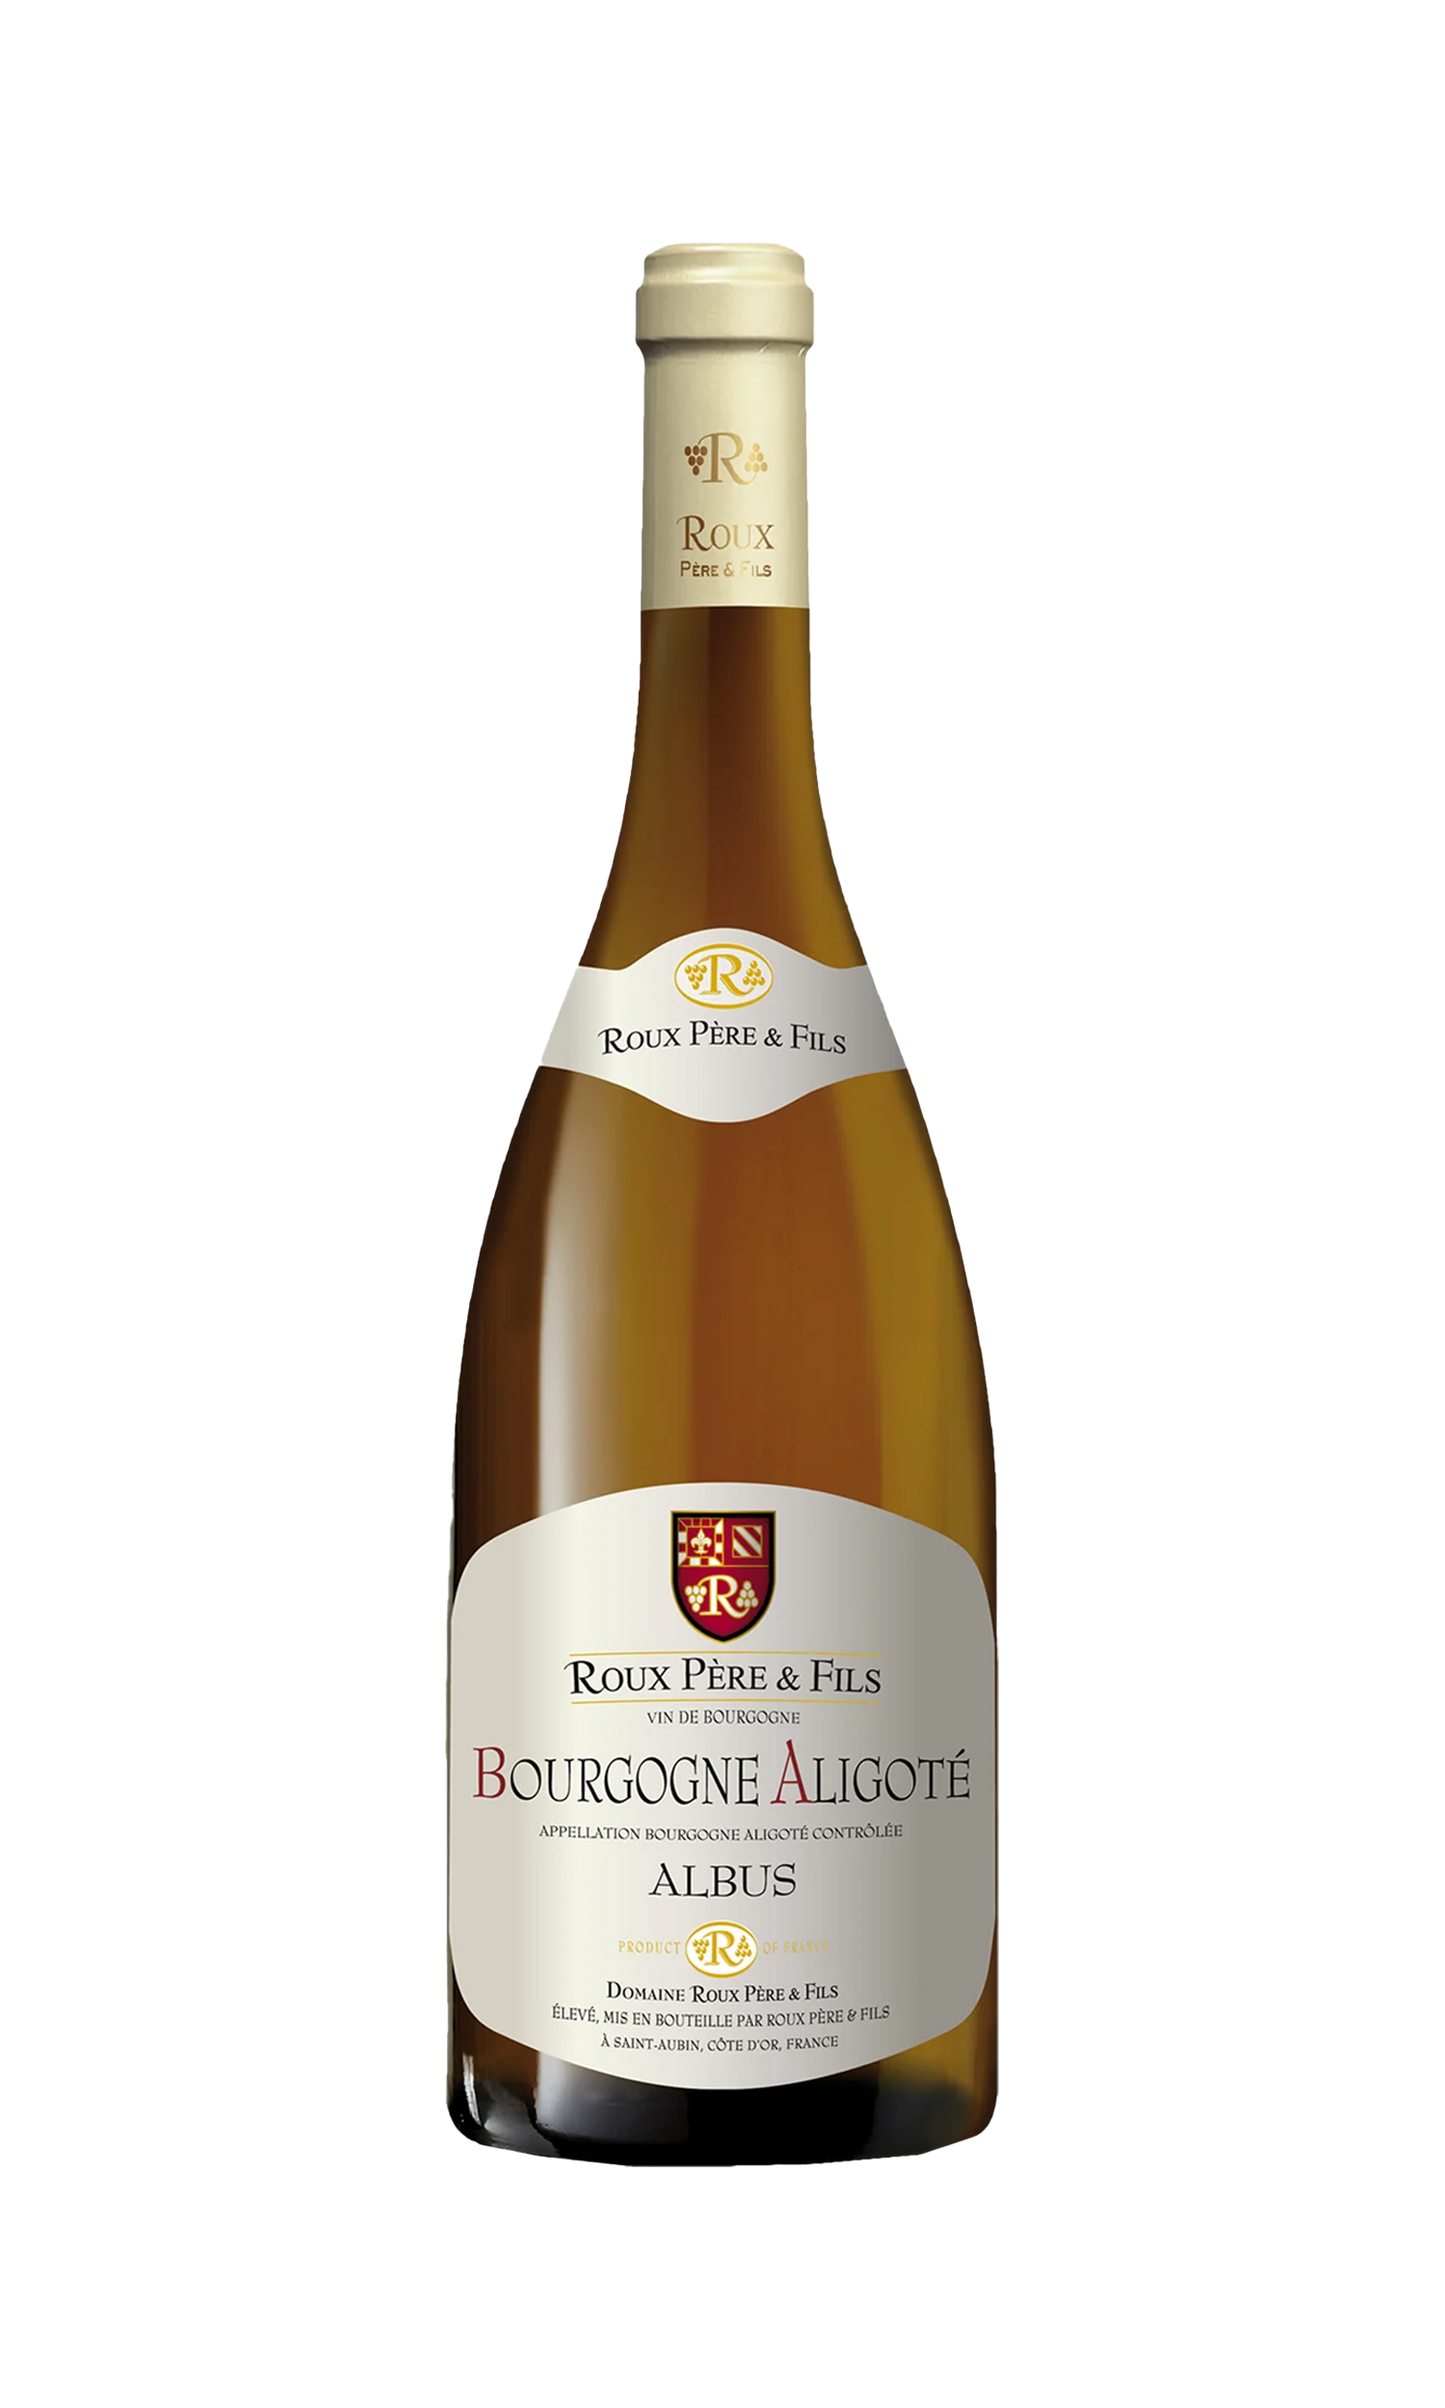 Domaine Roux Bourgogne Aligote Albus 2020